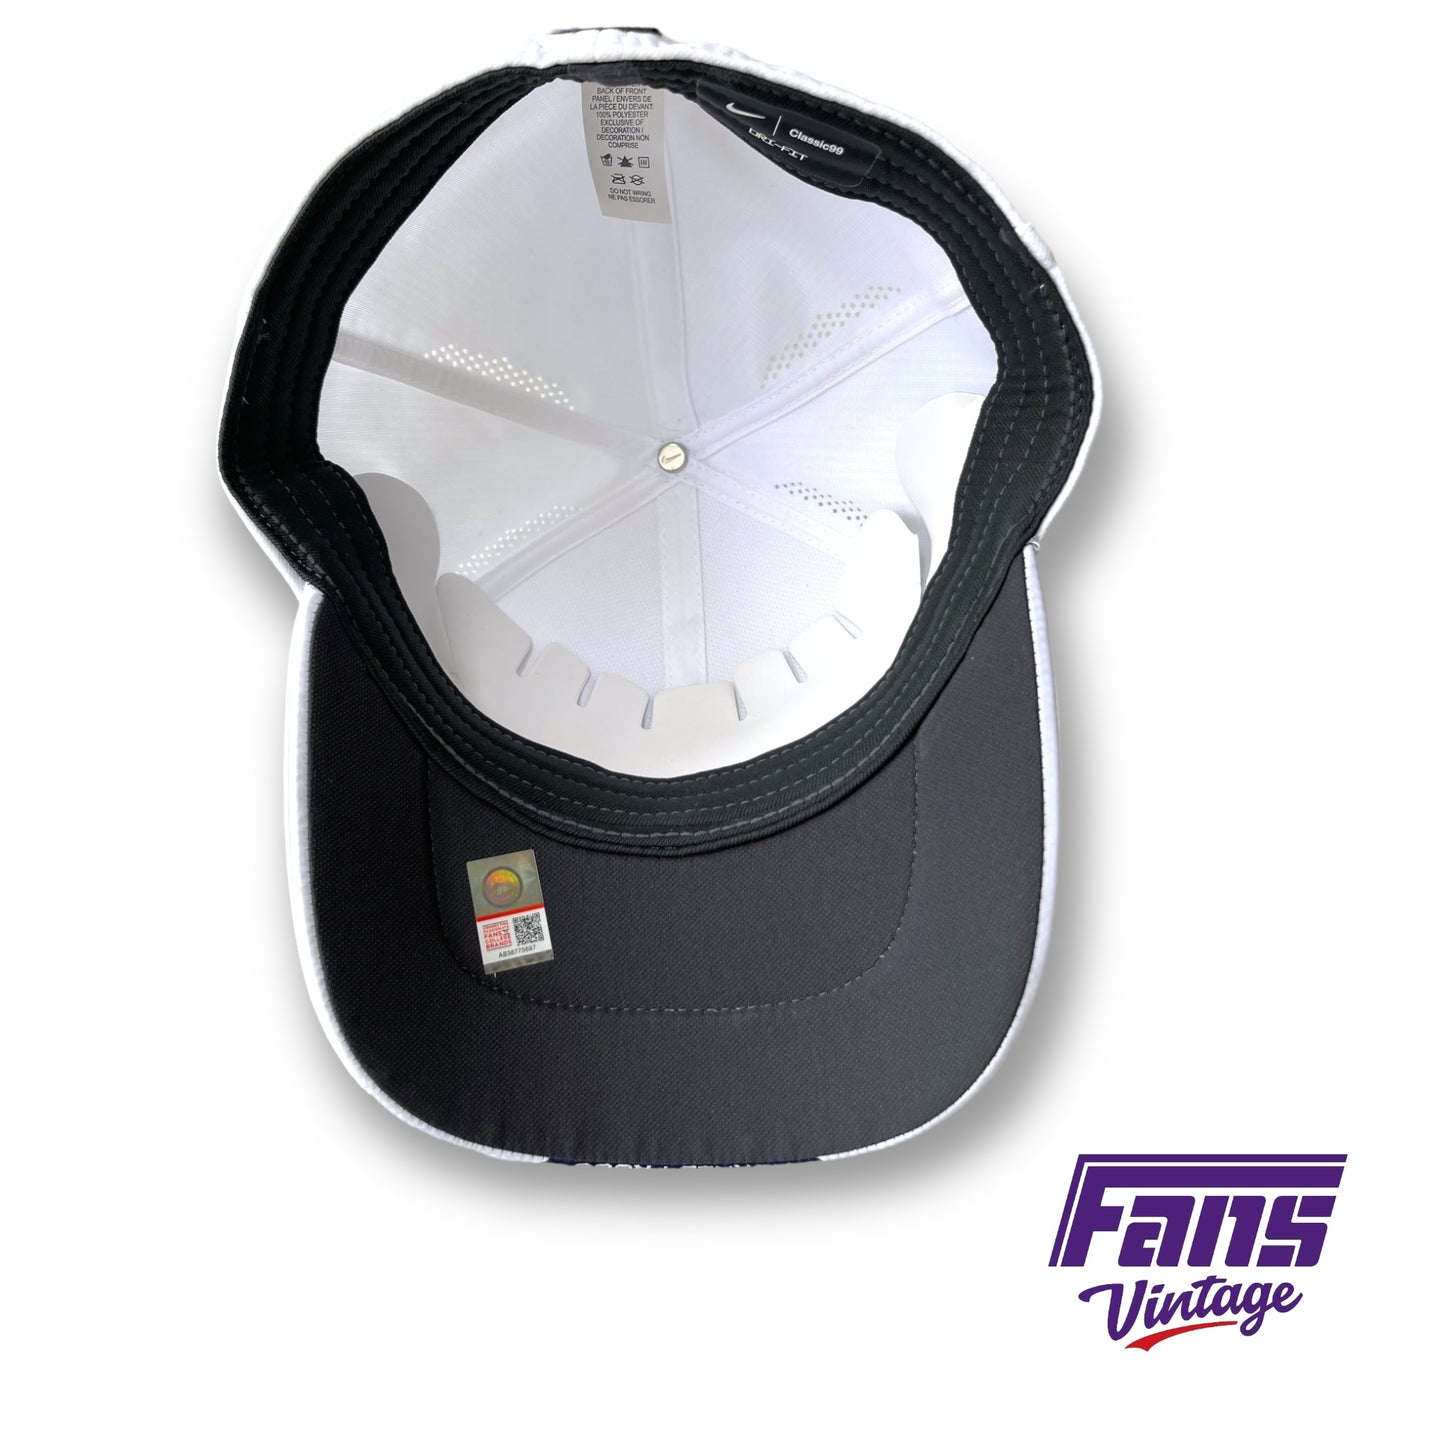 TCU Team Issue Nike “On Field” Premium Coach’s Hat